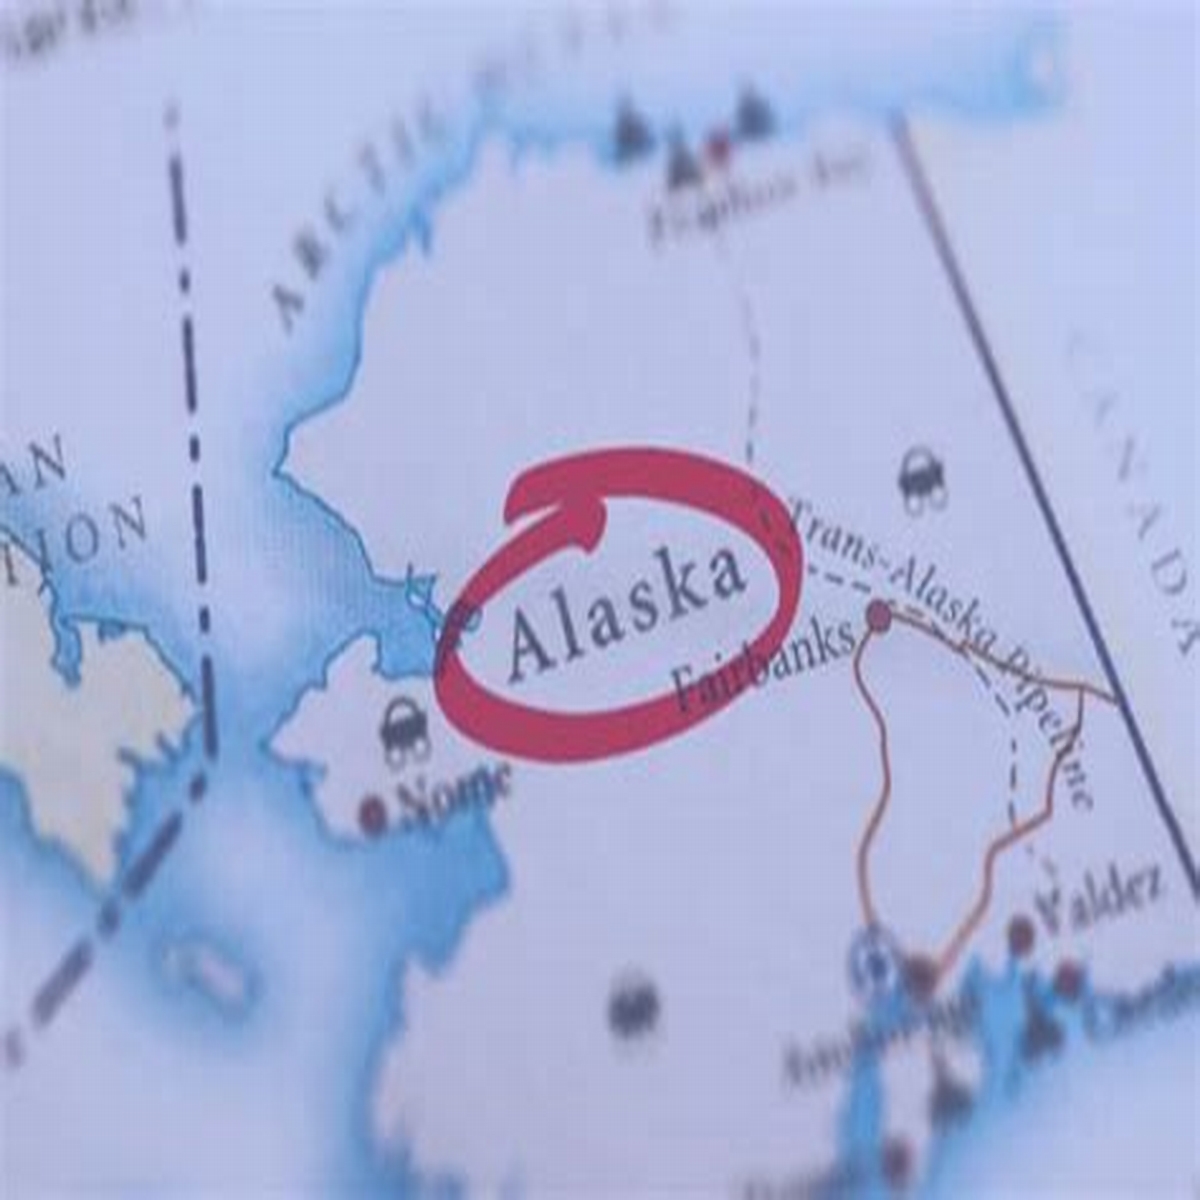 Alaska Nudist Beach - Asuult Web :: ï¿½ï¿½ï¿½ï¿½ï¿½ï¿½ ï¿½ï¿½ï¿½ï¿½ ï¿½ï¿½ï¿½ï¿½ï¿½ï¿½ ï¿½ï¿½ï¿½ï¿½ï¿½ï¿½!